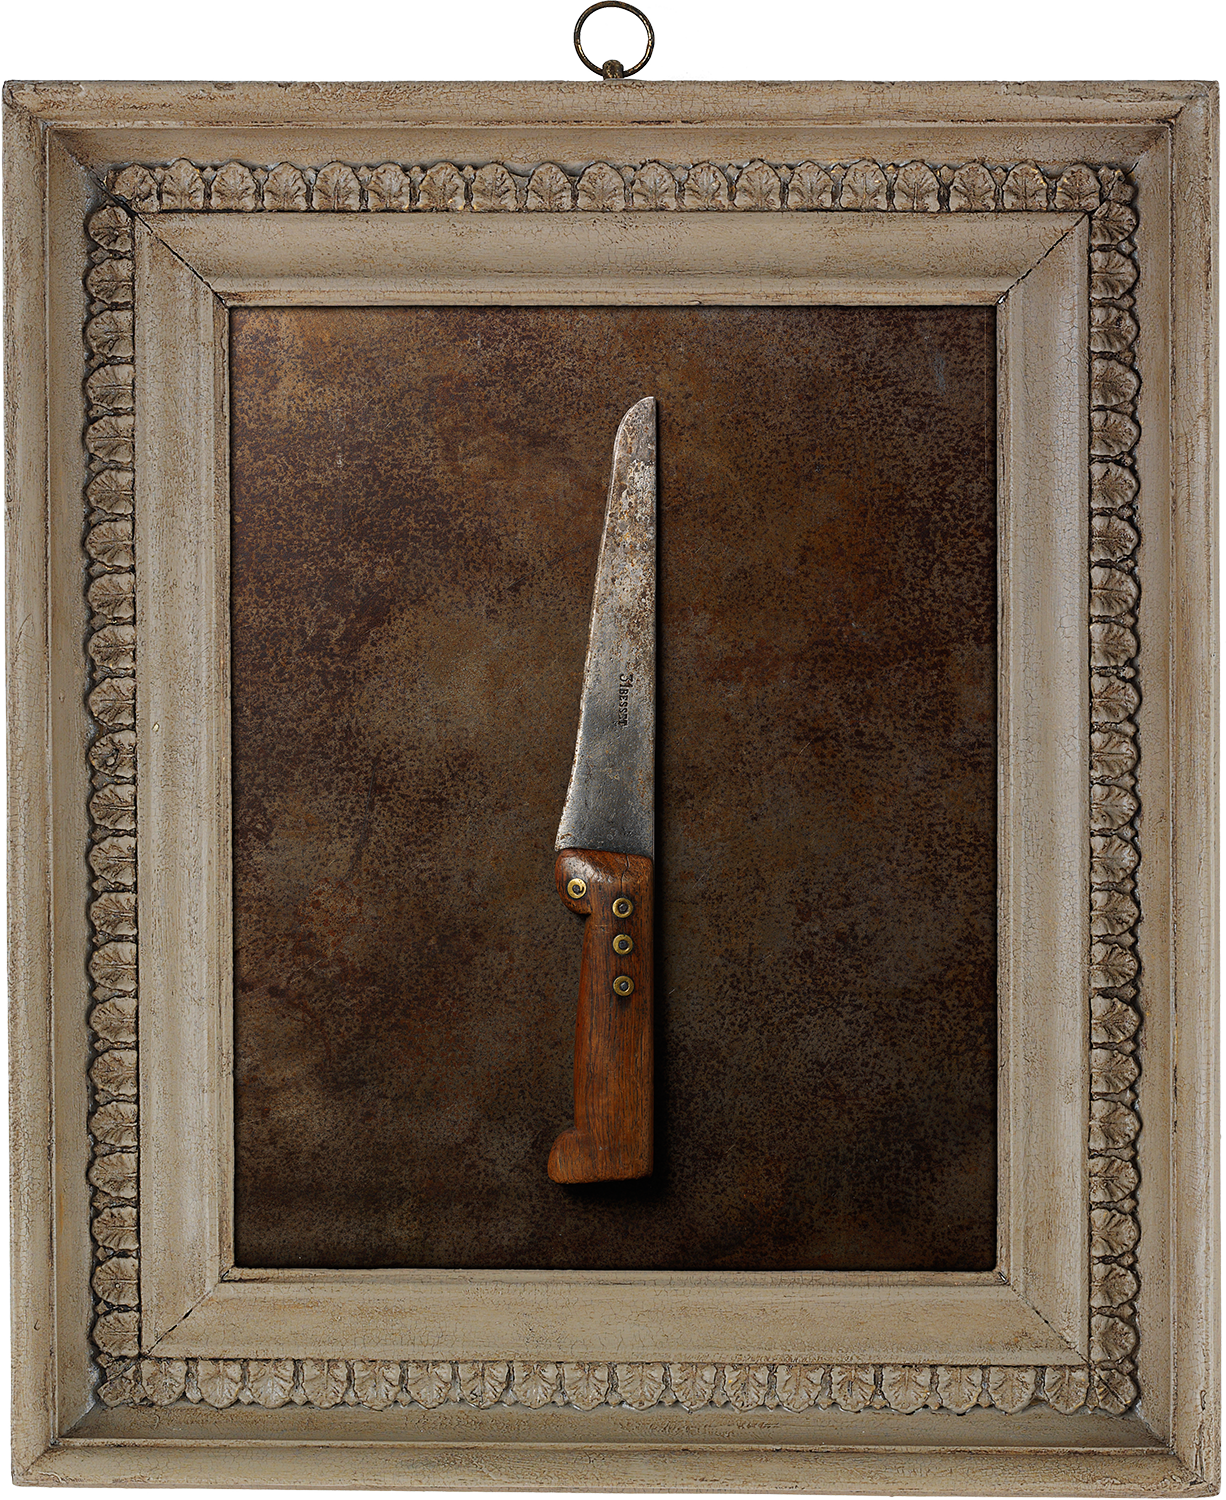 #60 31Besset Knife